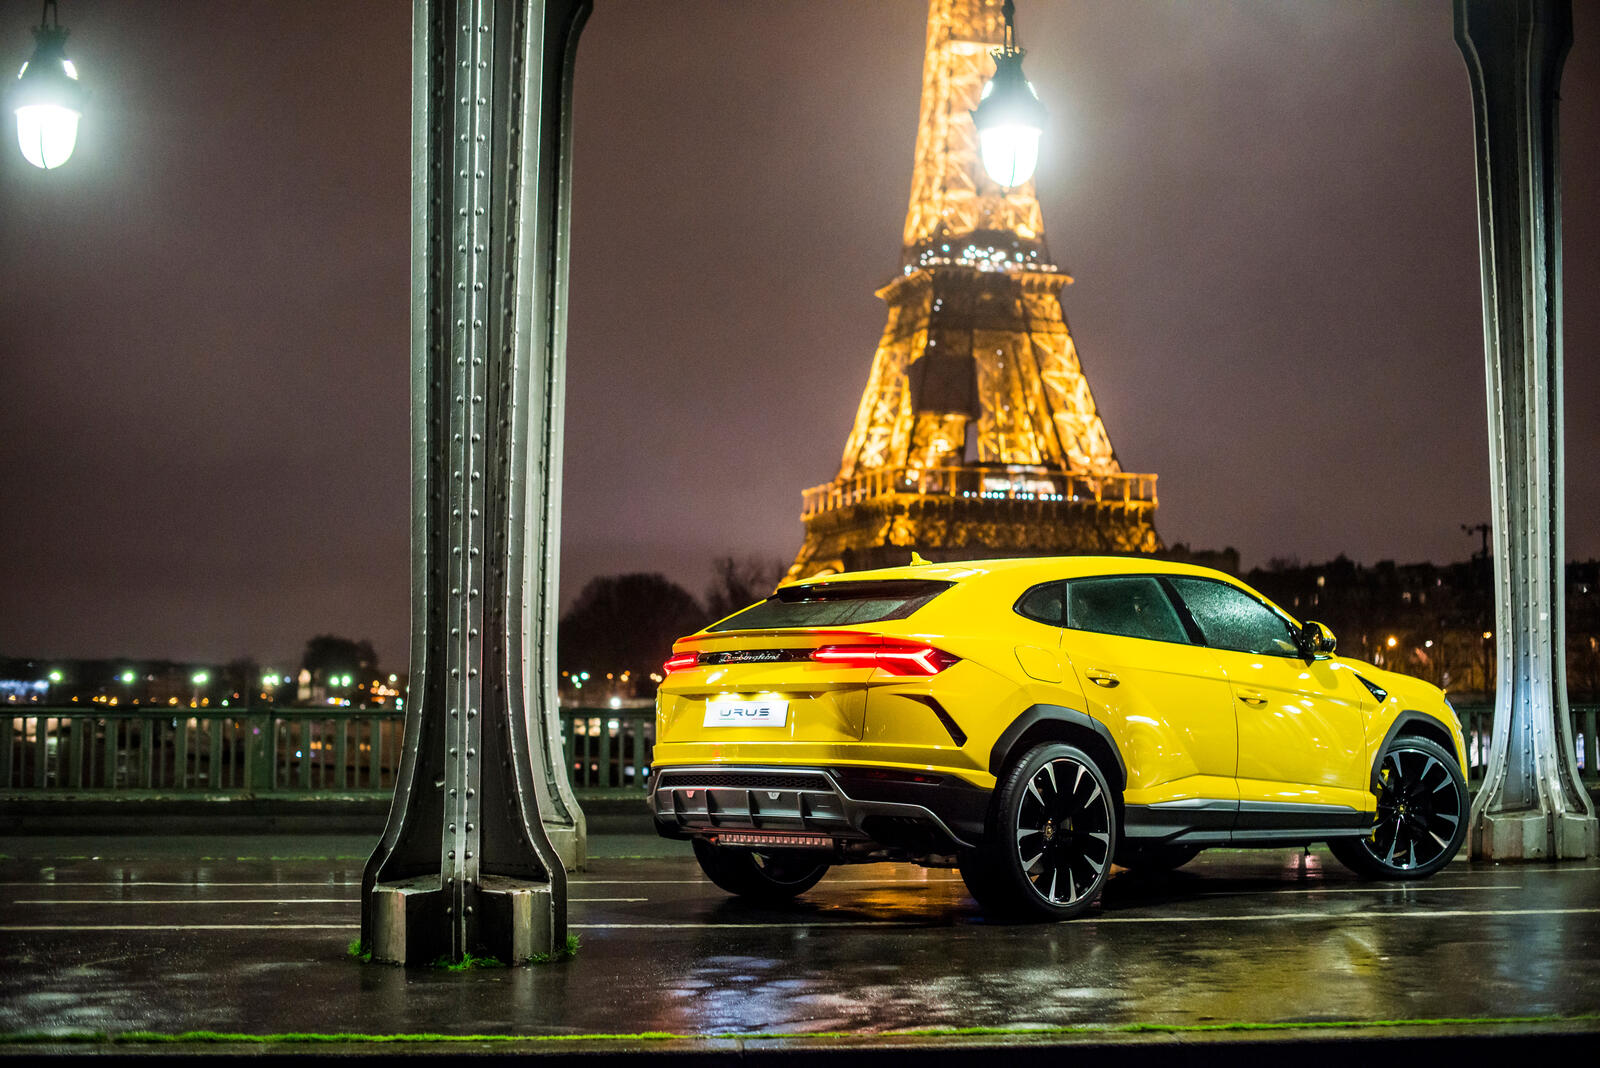 Free photo A yellow Lamborghini Urus against the backdrop of the Eiffel Tower